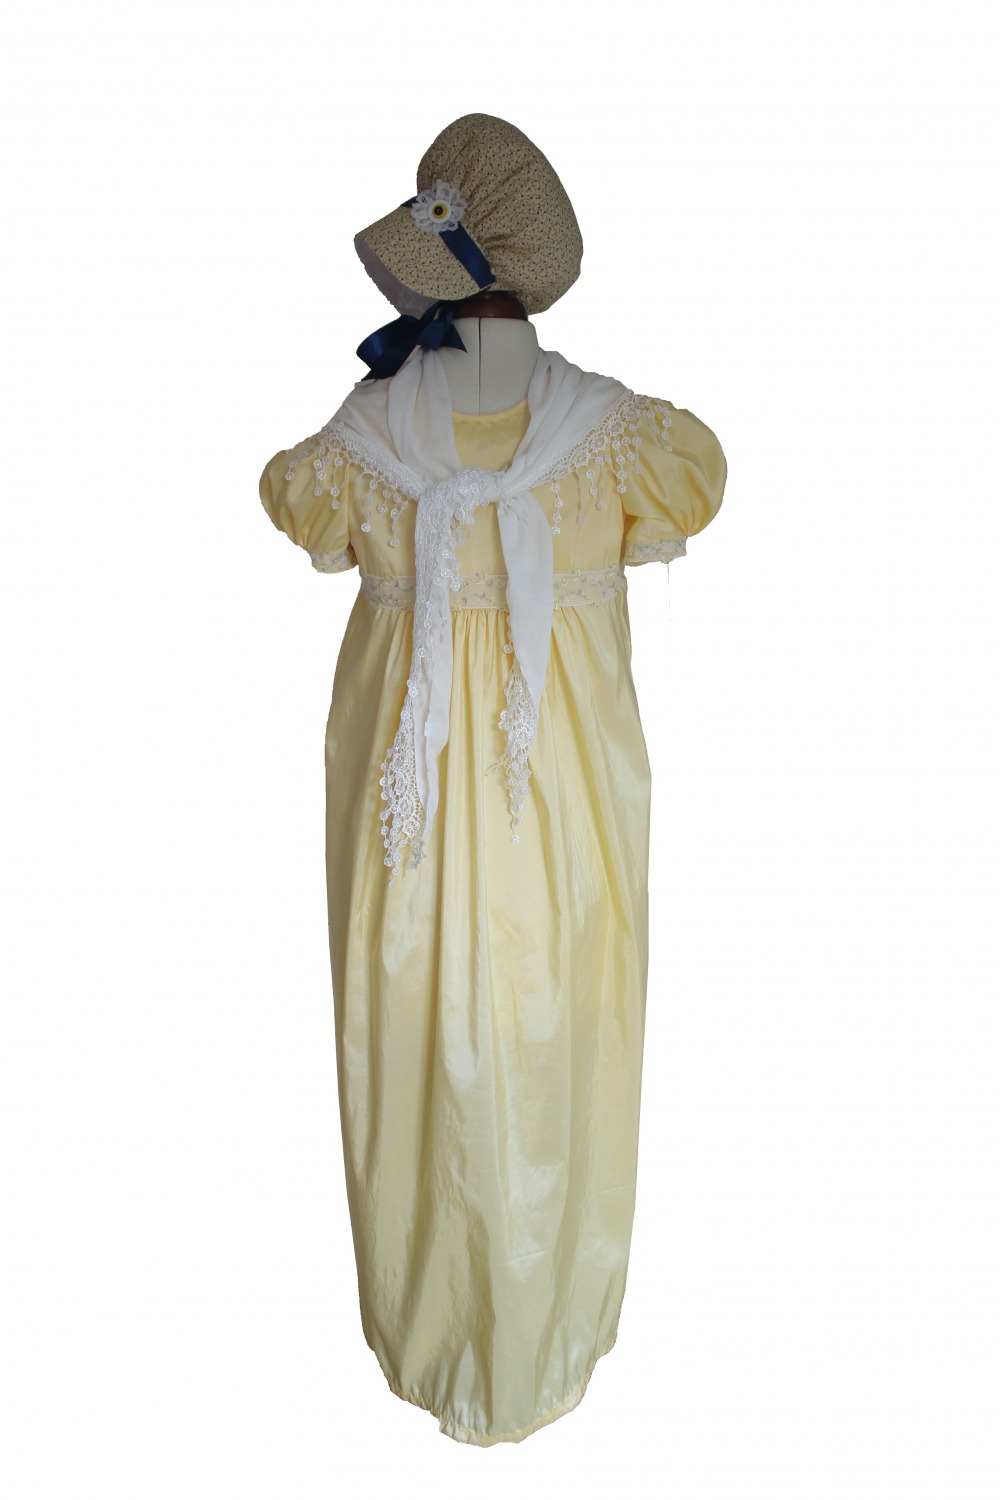 Girl's Regency Jane Austen Costume Age 13 - 14 Years  Image